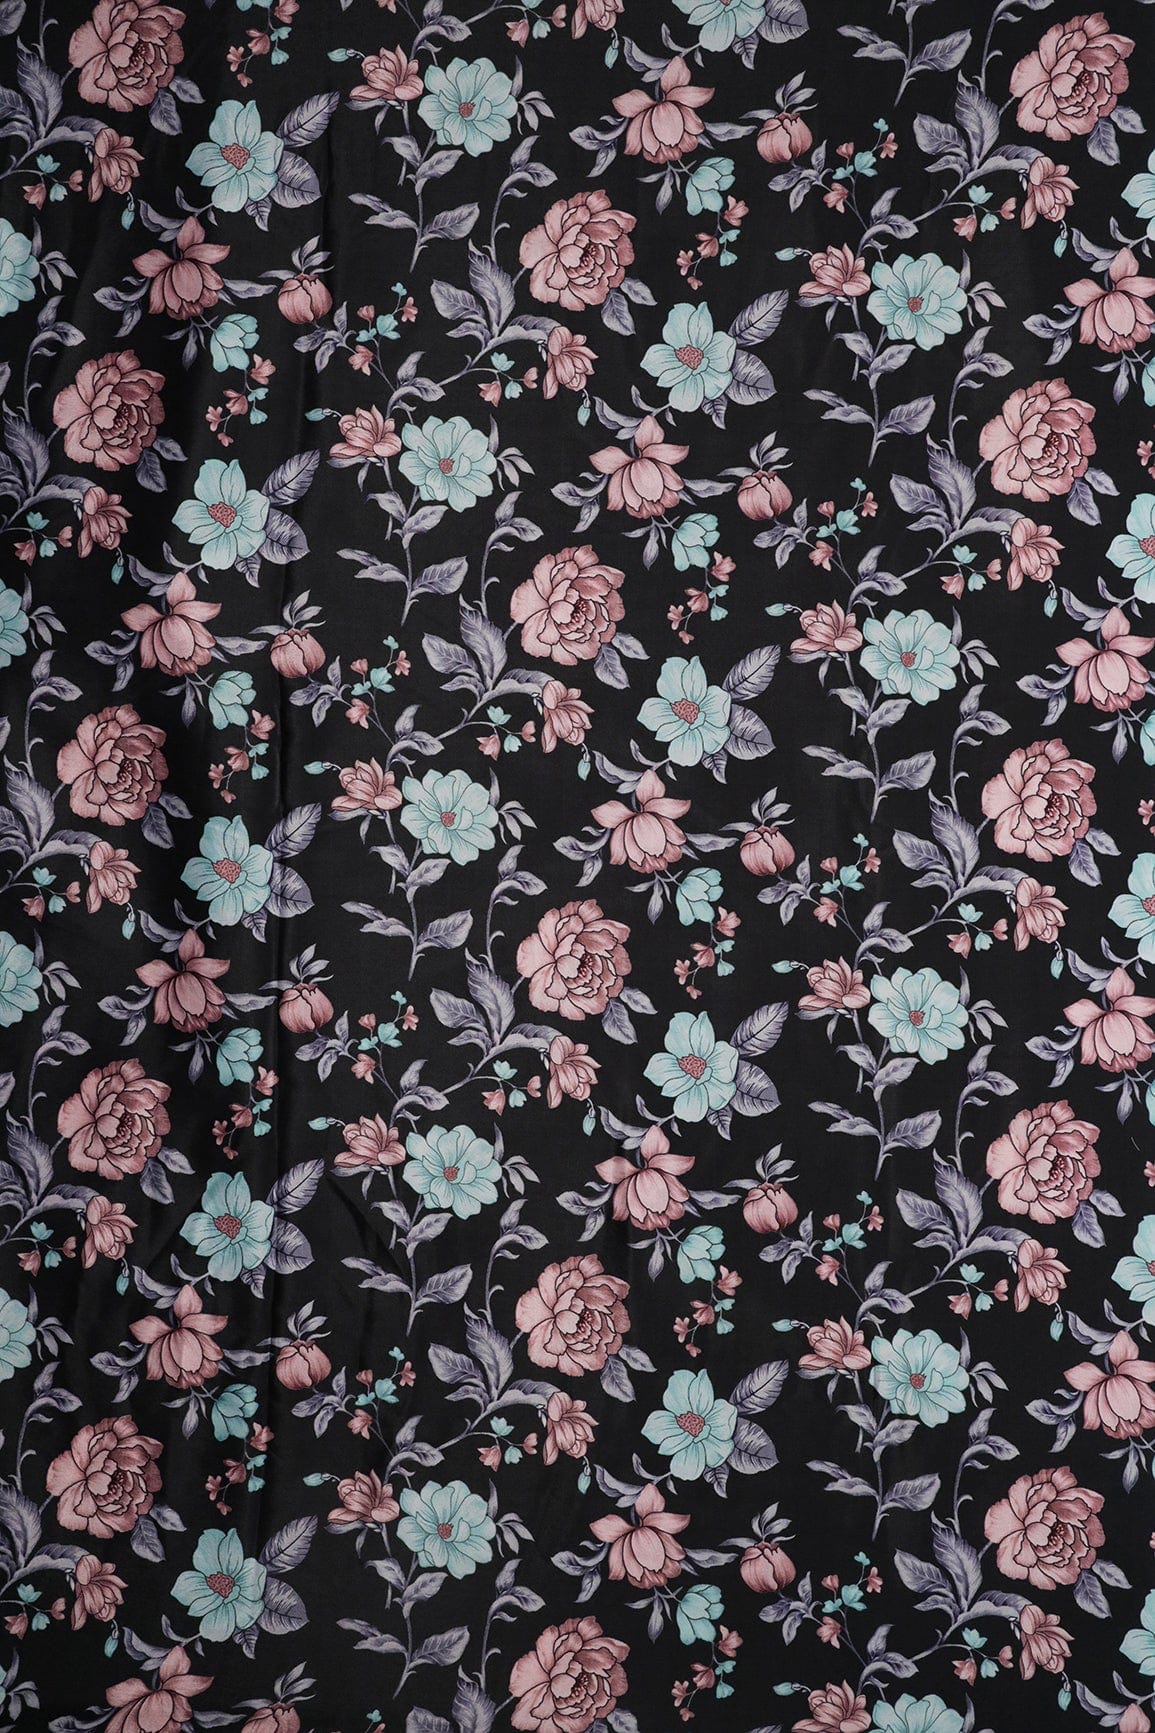 Teal And Brown Floral Pattern Digital Print On Black Crepe Fabric - doeraa